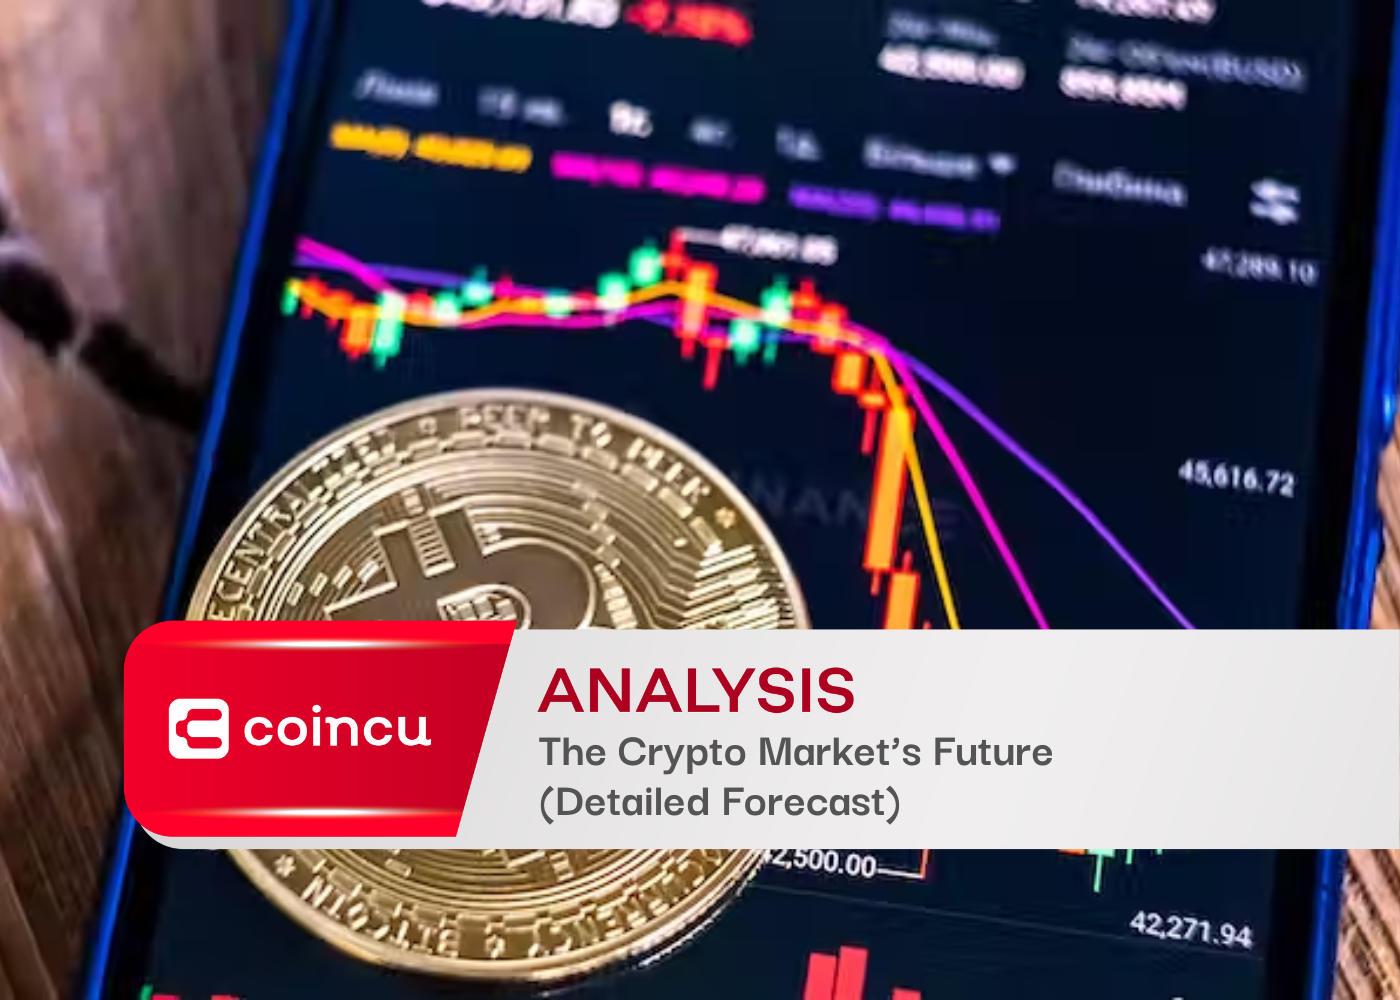 The Crypto Market’s Future- Detailed Forecast